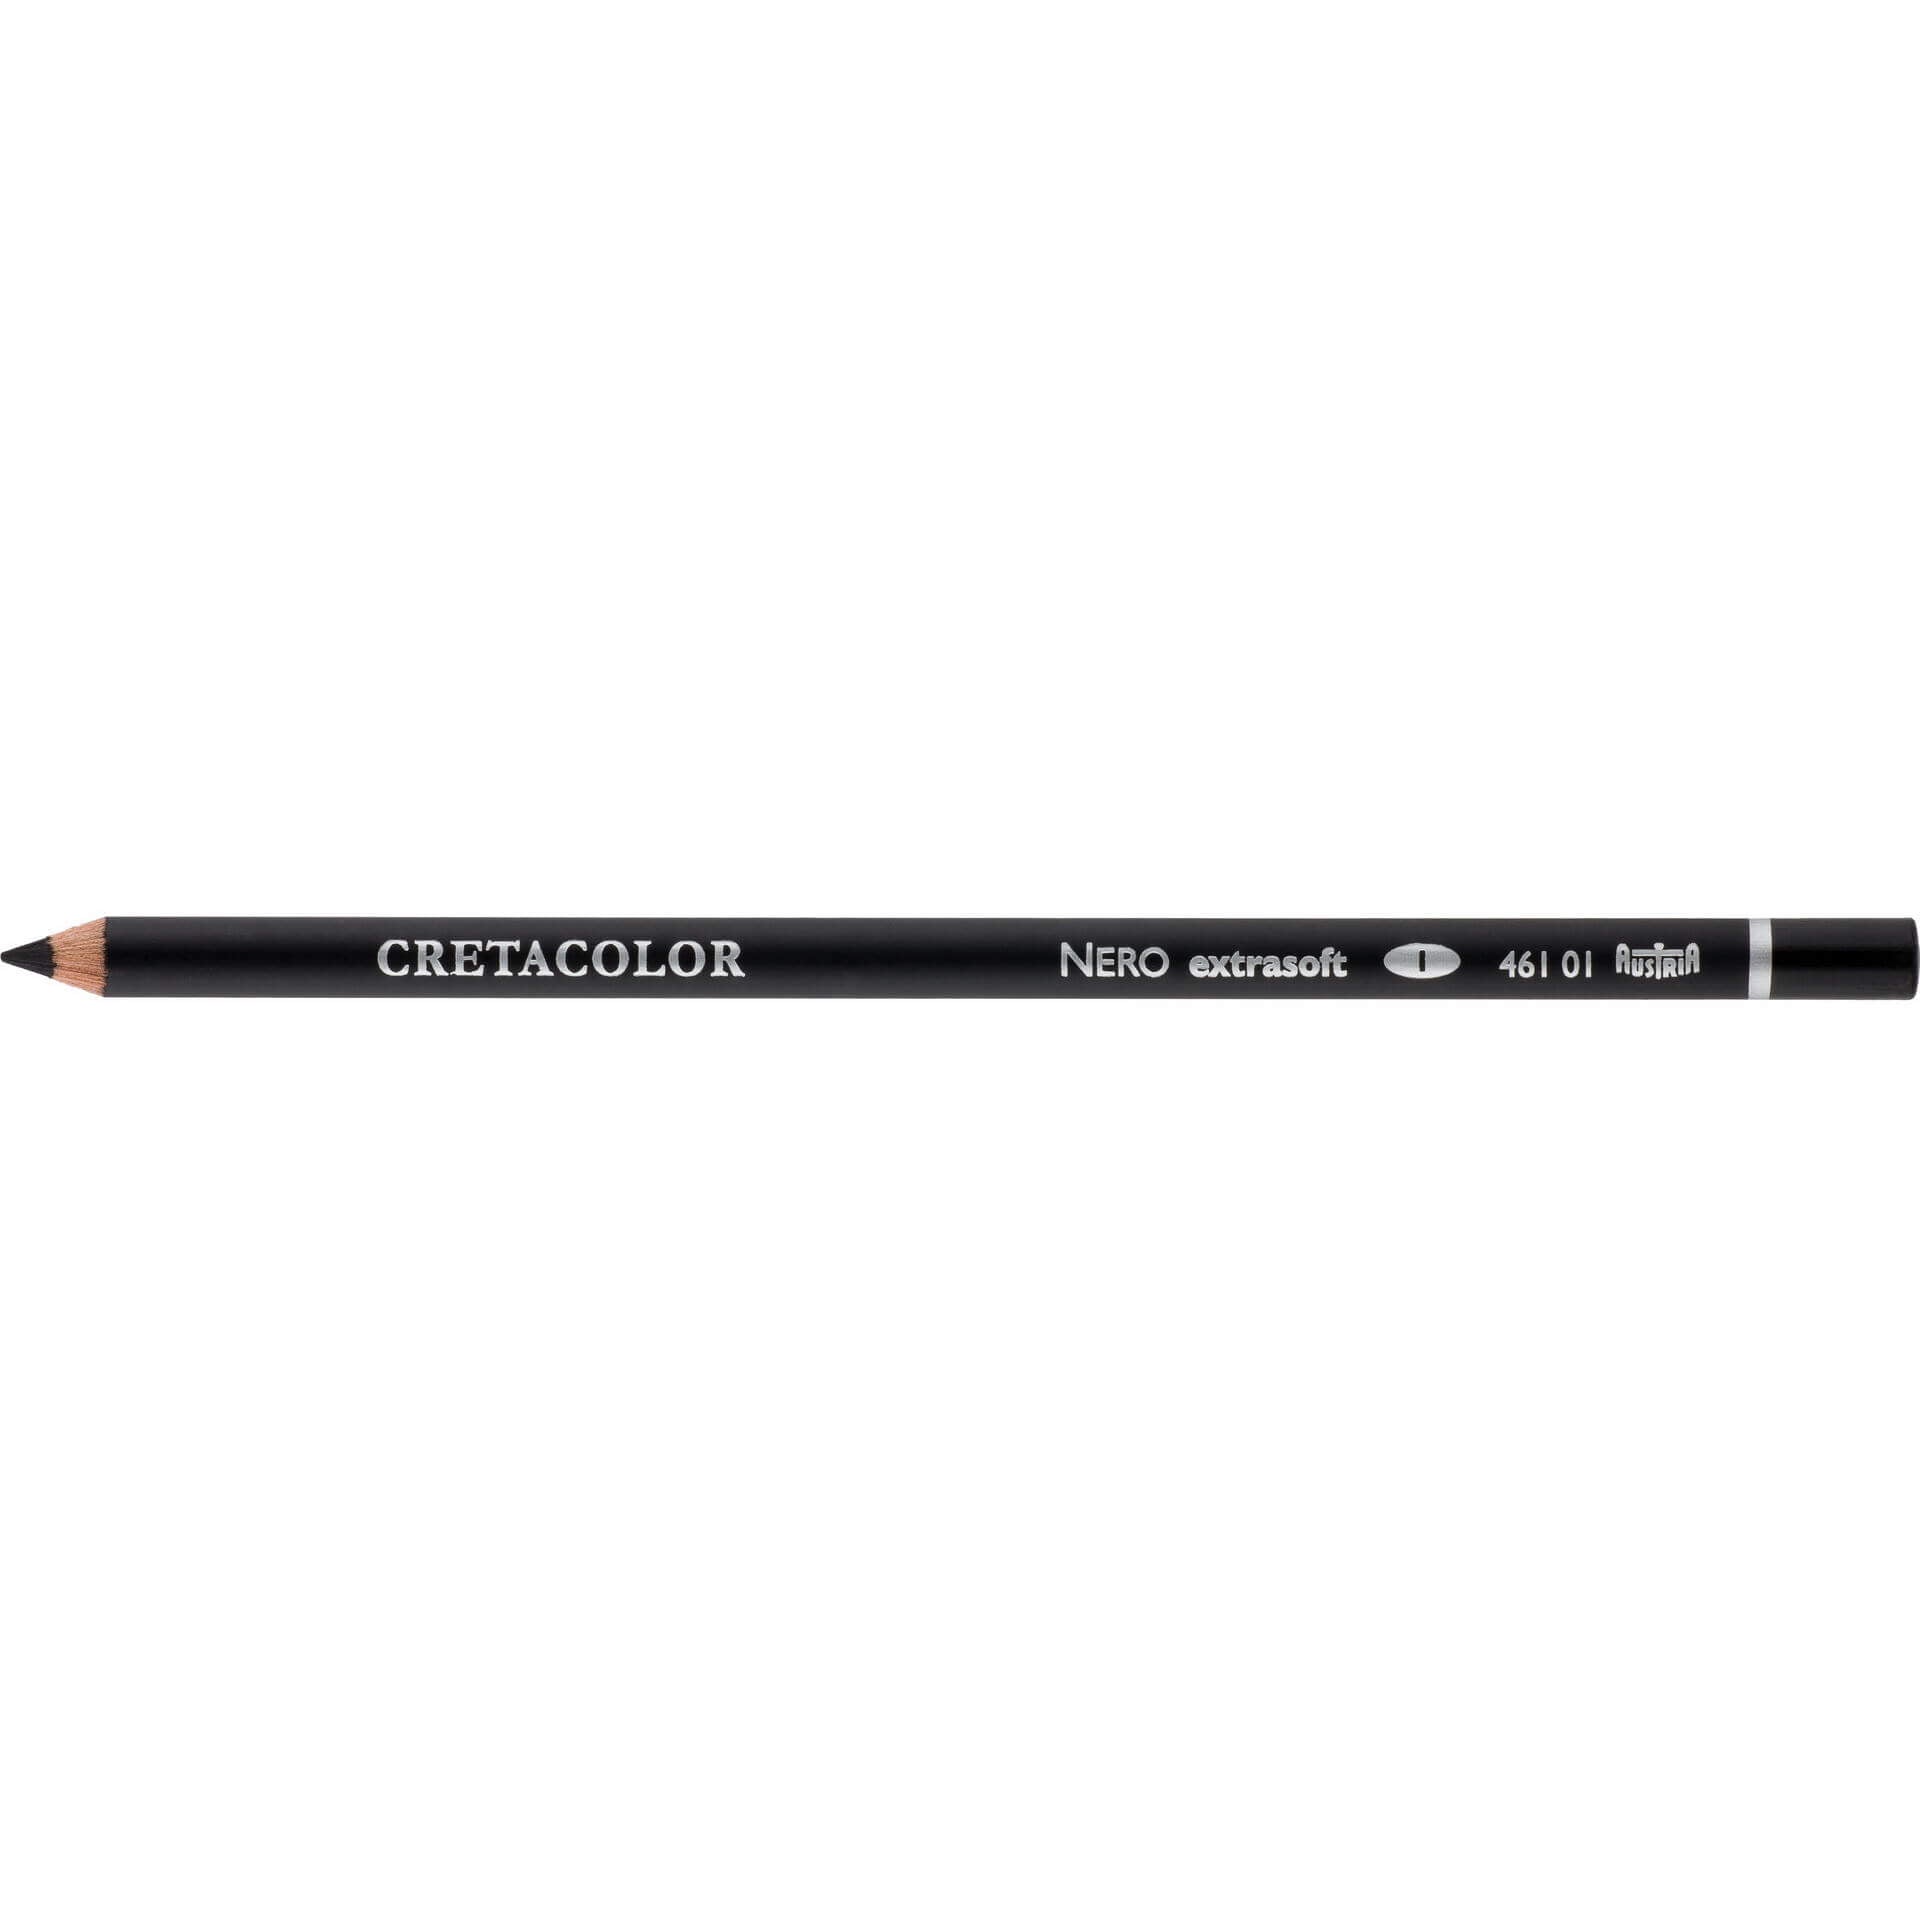 Royal Graphite Pencil Set 10 Drawing Pencils Charcoal